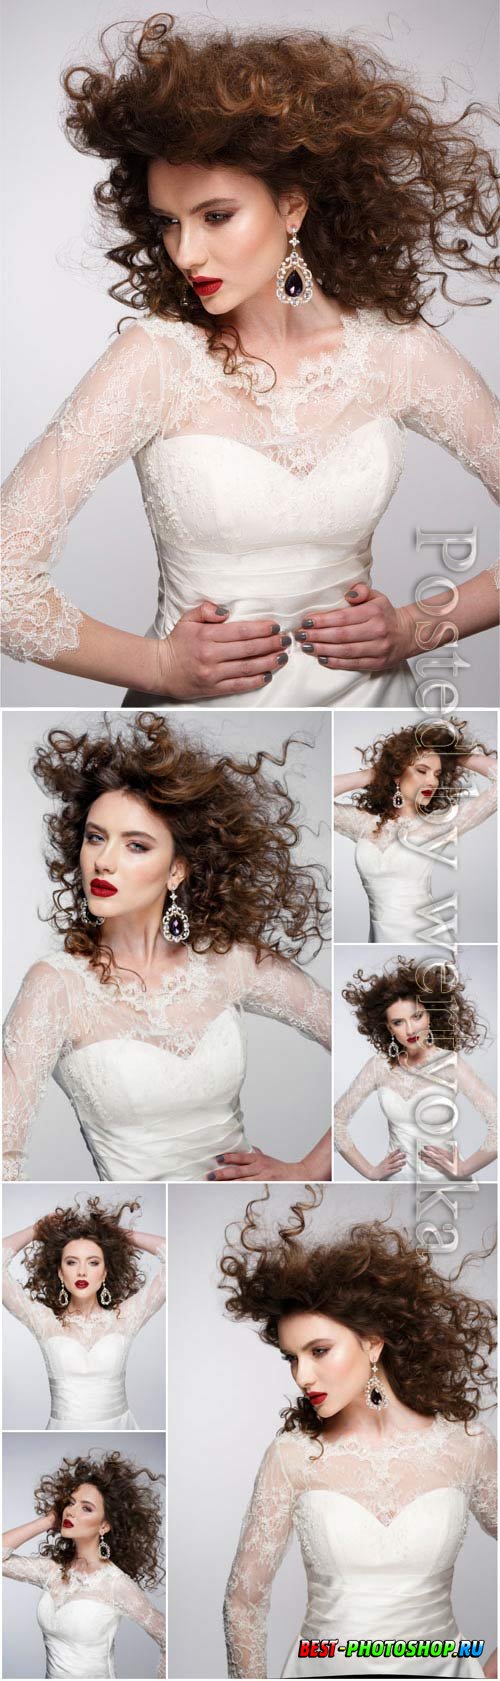 Luxurious girl in white wedding dress stock photo